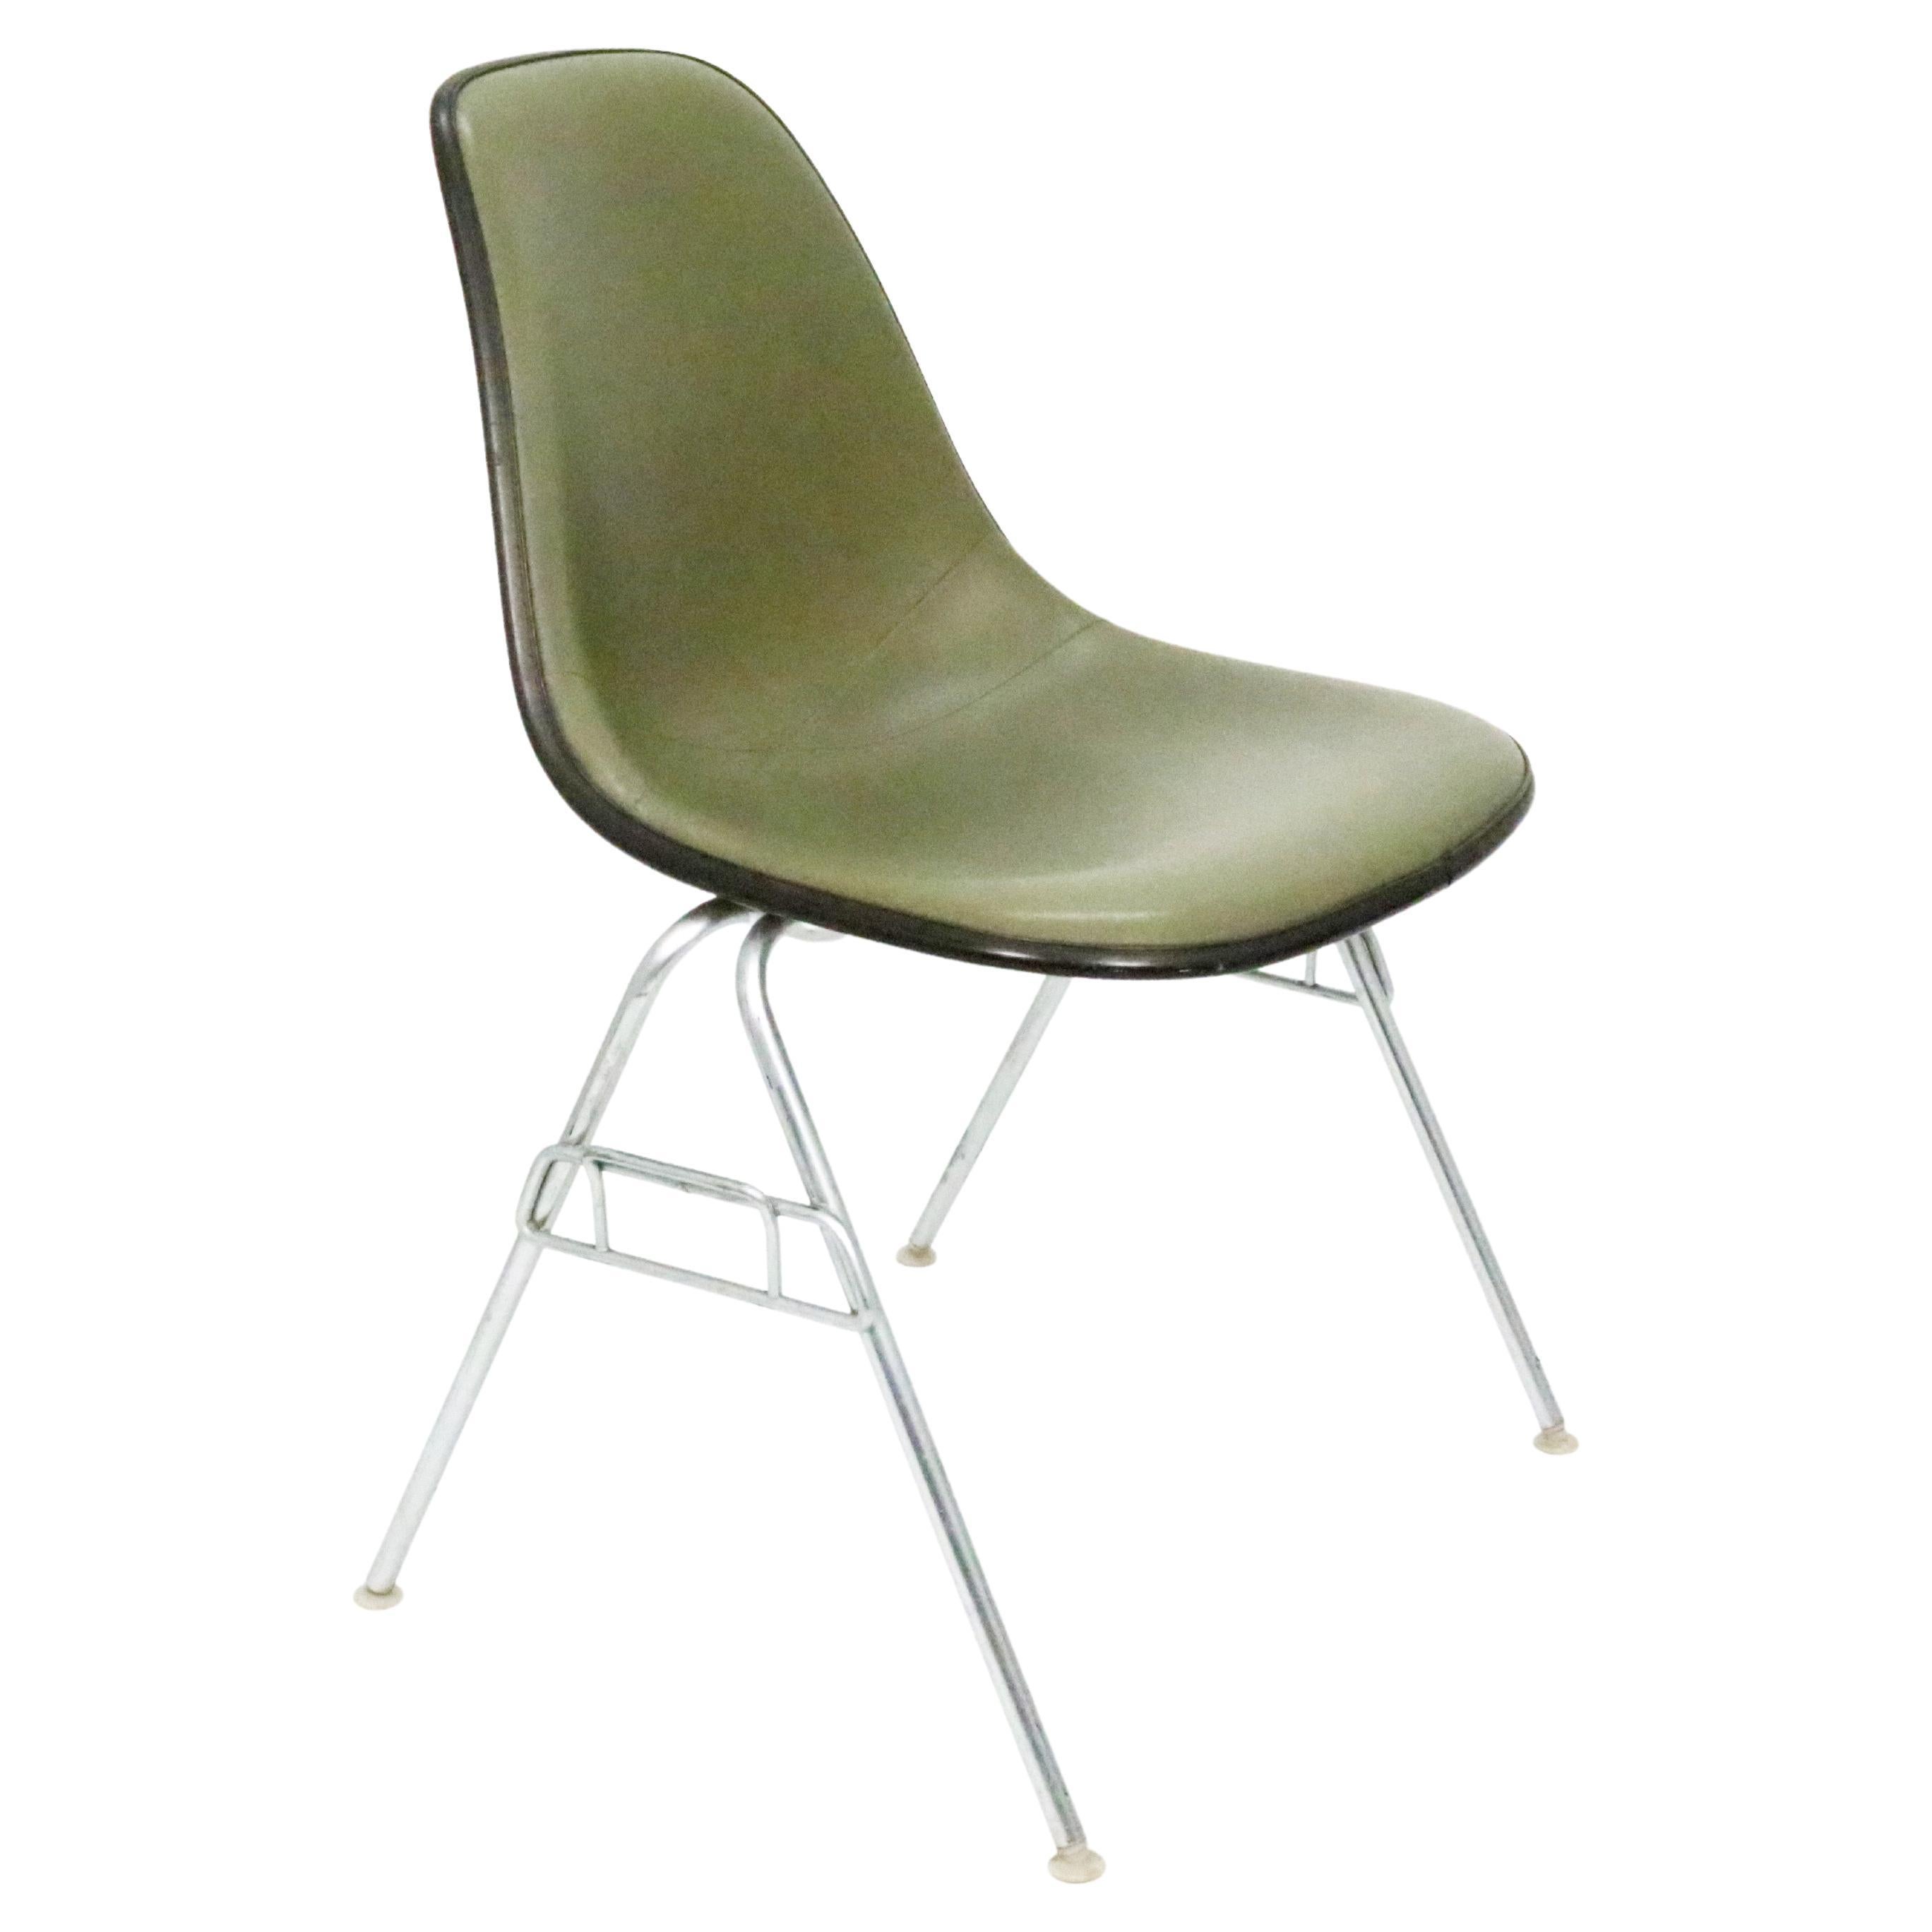 Eames for Herman Miller Fiberglass Shell Chair, Green on Stackable Base